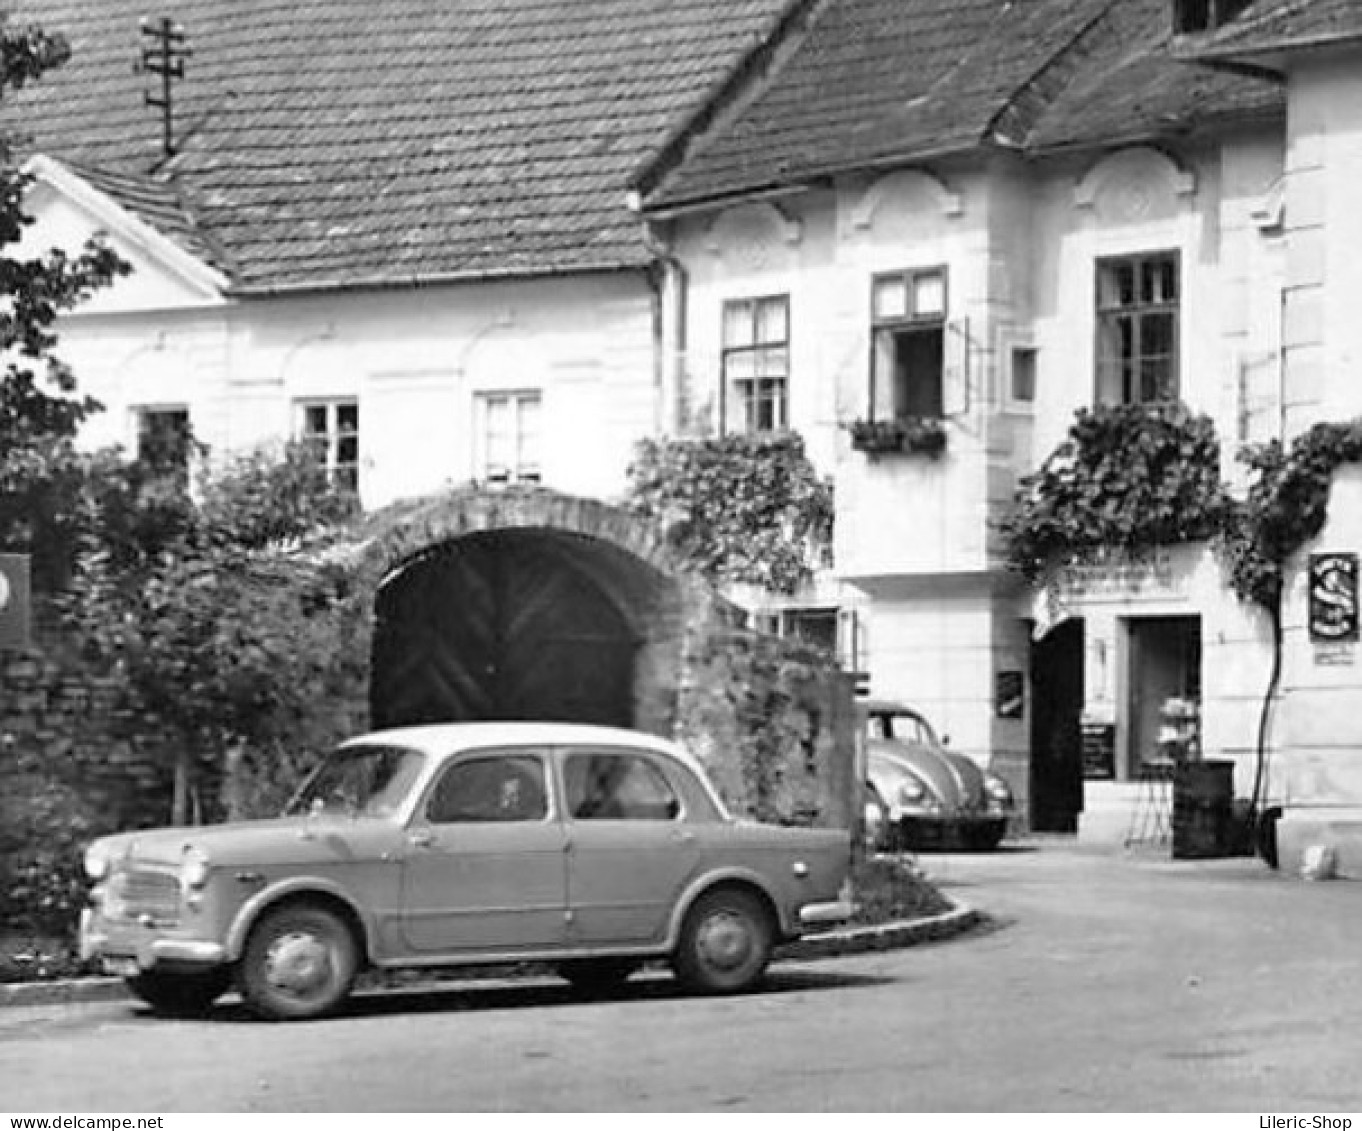 EMMERSDORF A. D. Donau, NO. Wachau, GEORG BRUNNERPLATZ. # Automobile # Fiat NSU Neckar - Melk